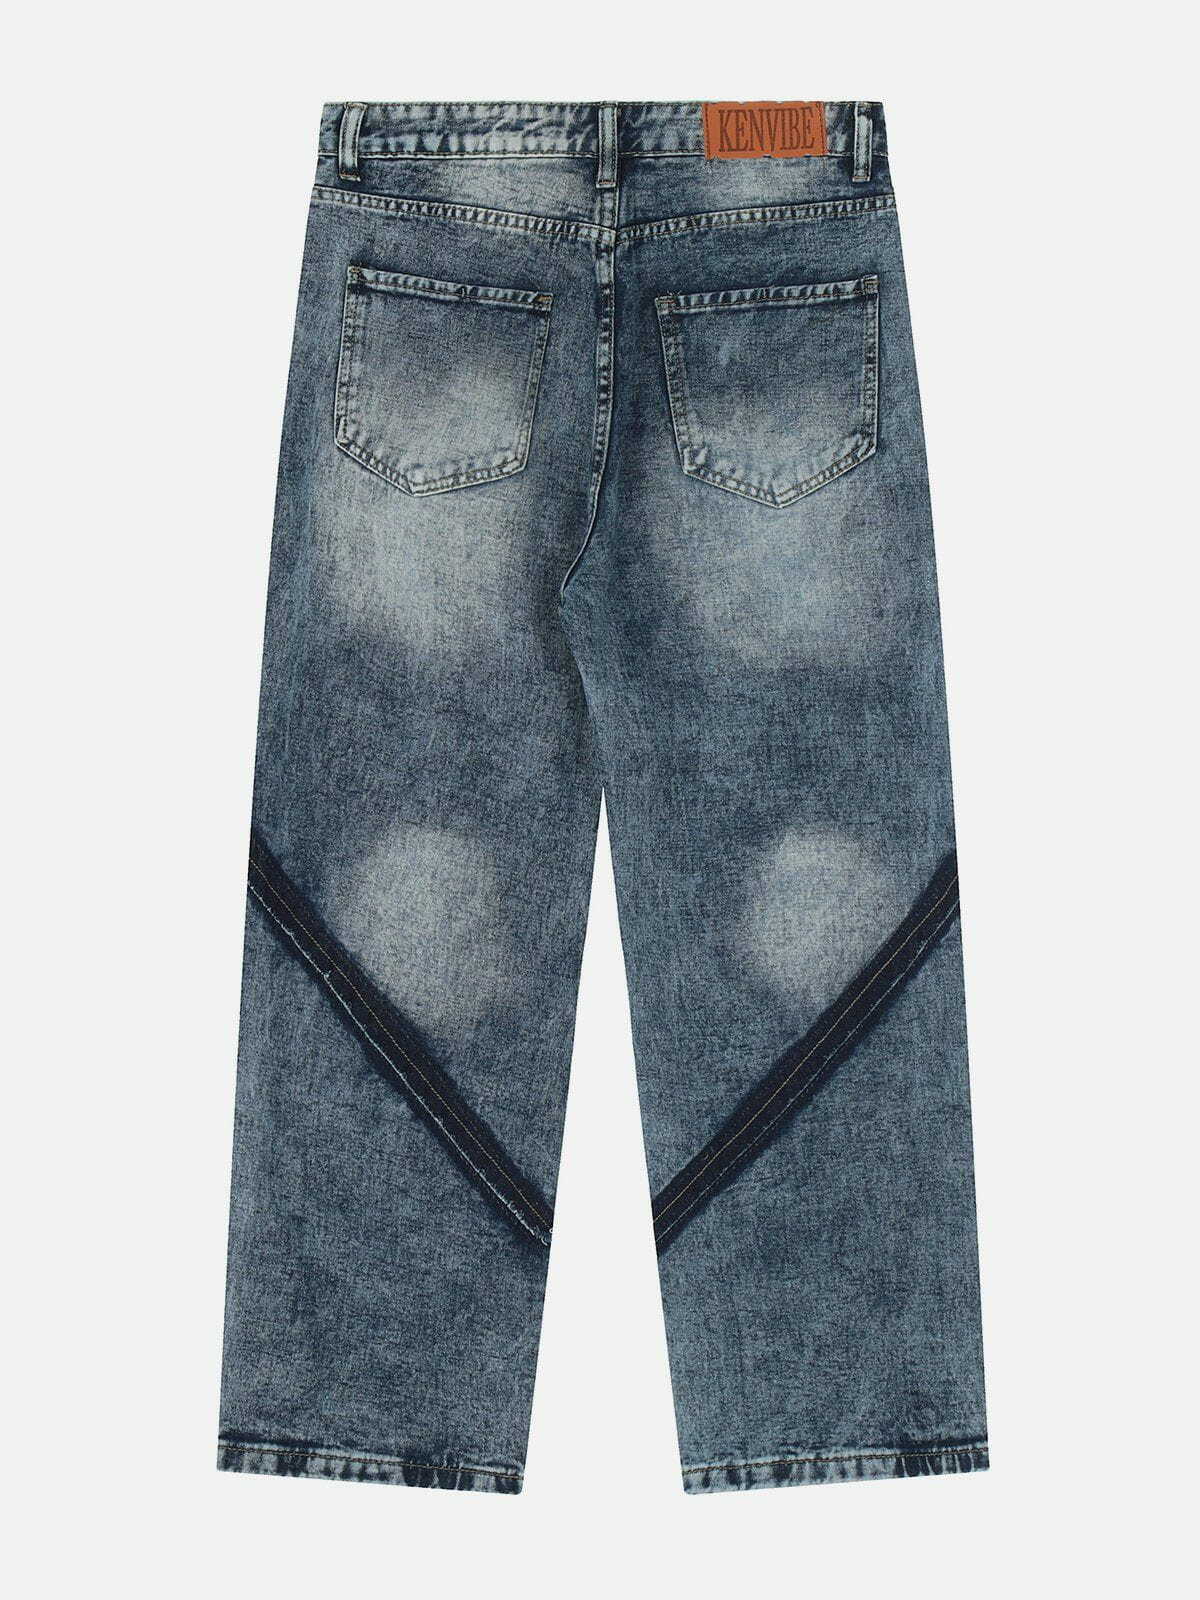 vibrant gradient jeans edgy & trendy streetwear 2675